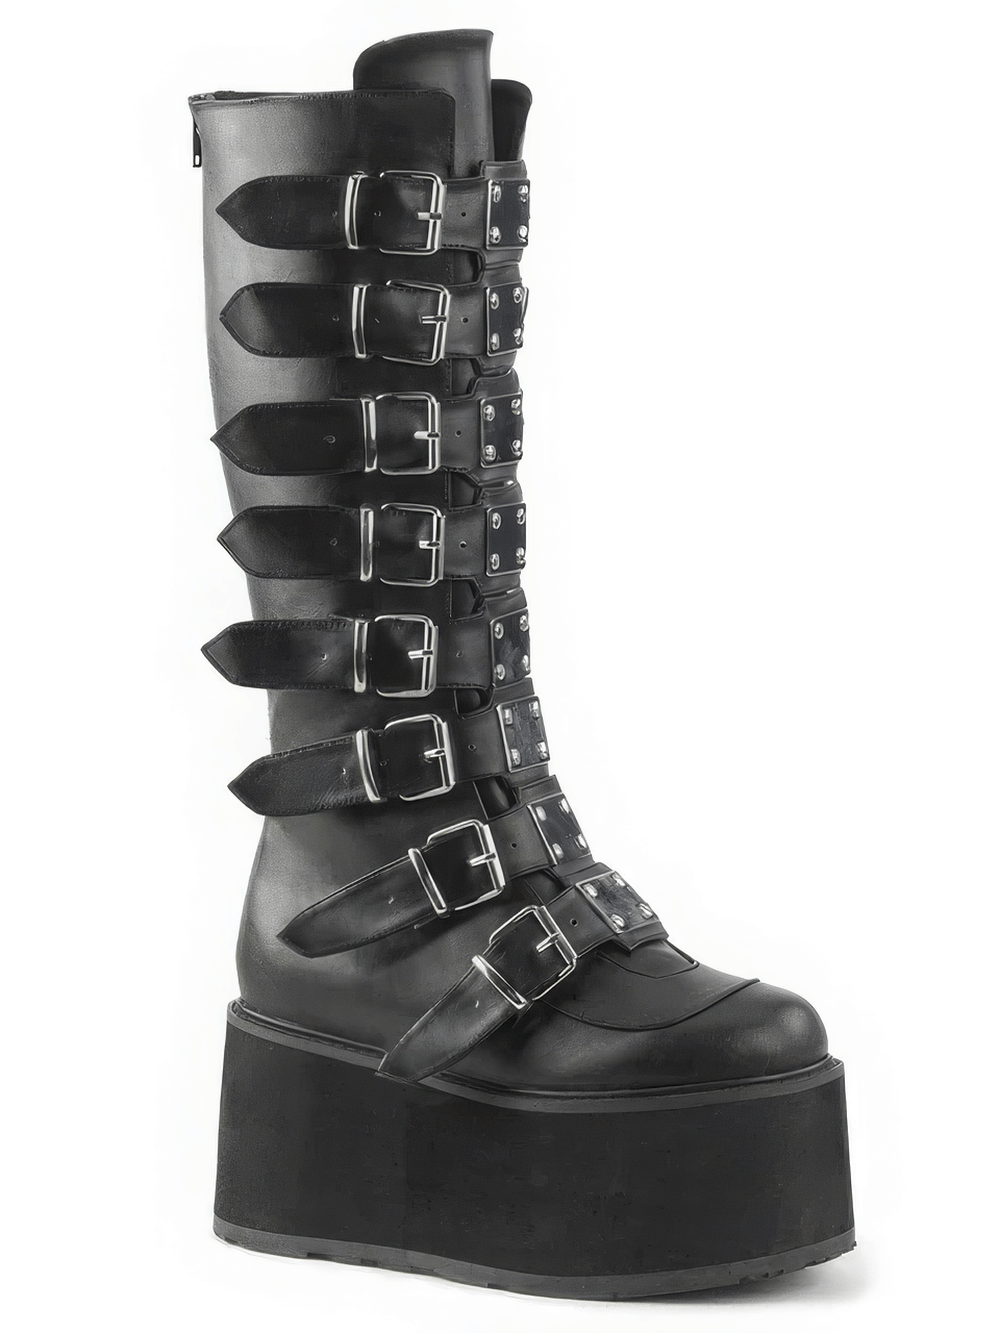 DEMONIA Black Knee High Platform Boots with Buckle Straps